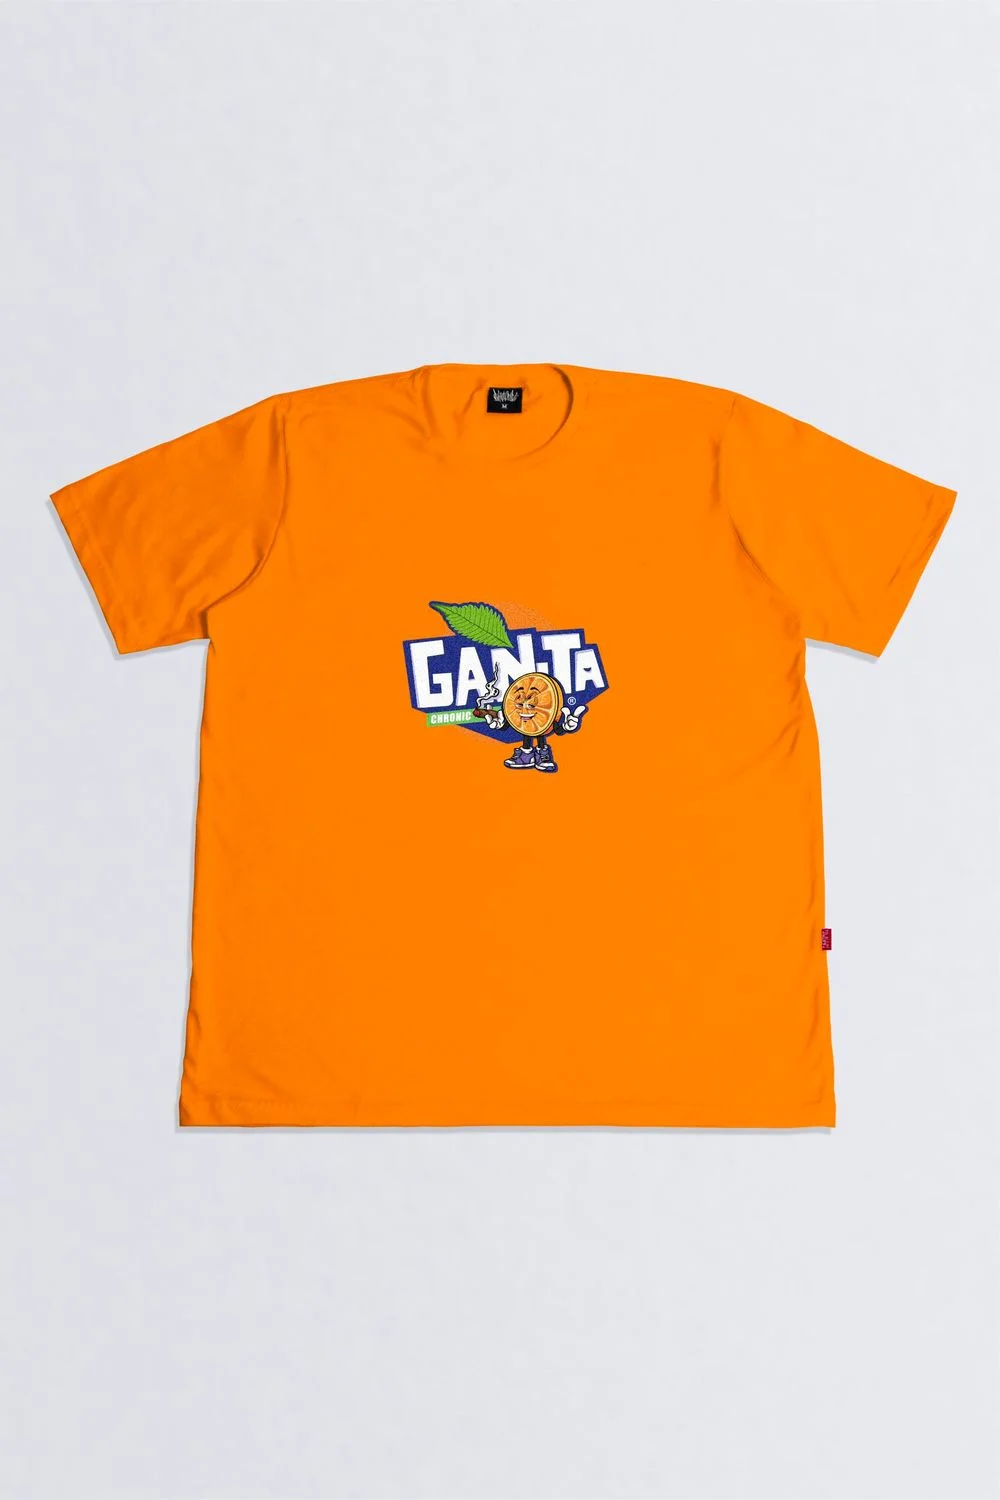 Camiseta Chronic 2894 Ganta Laranja - Point Vestuare